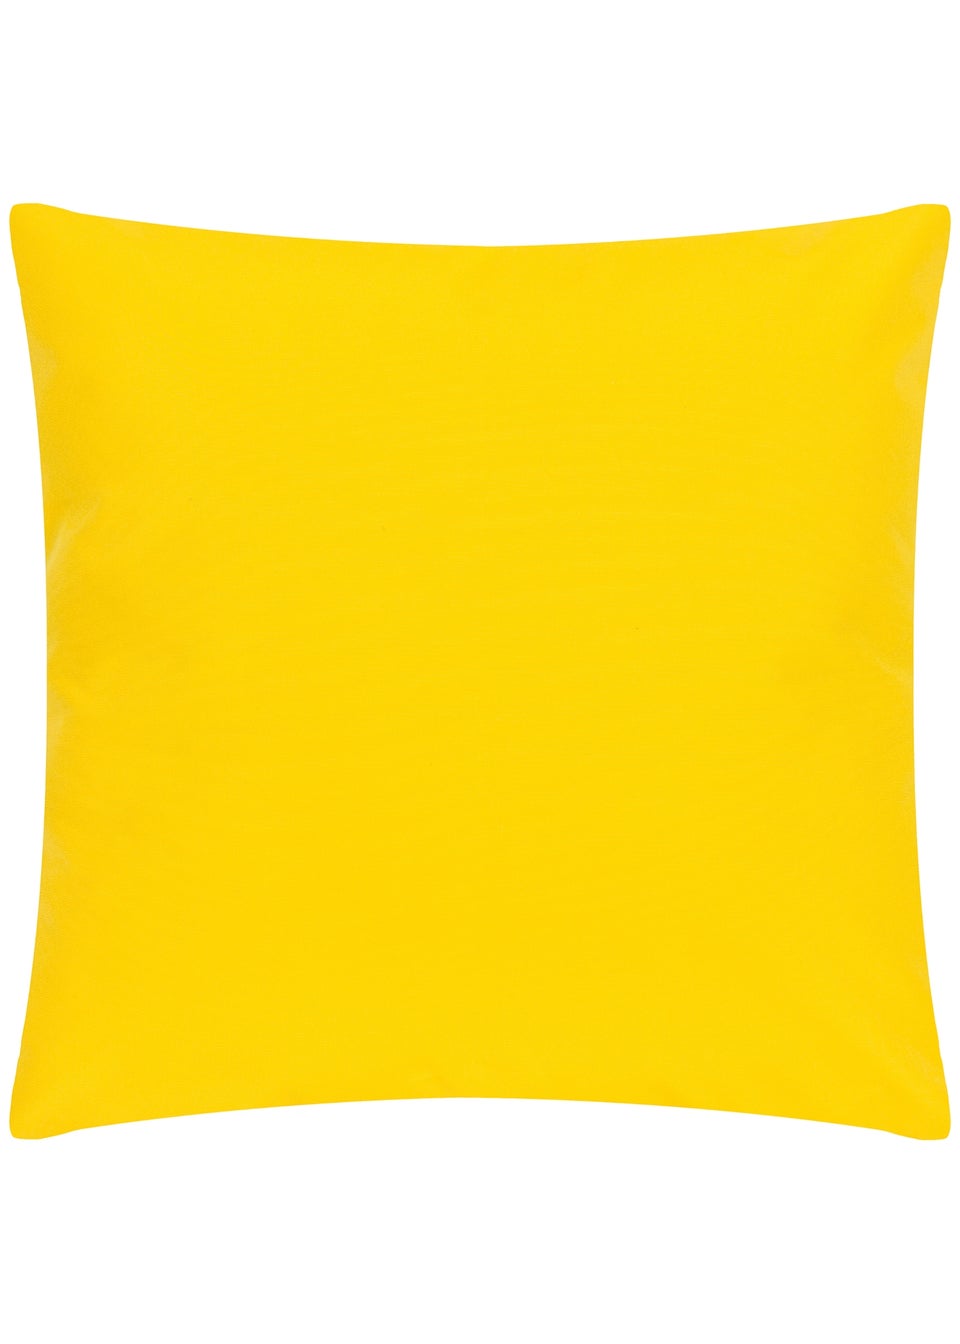 furn. Blue Lemonchello Outdoor Filled Cushion (43 x 43 x 8cm)